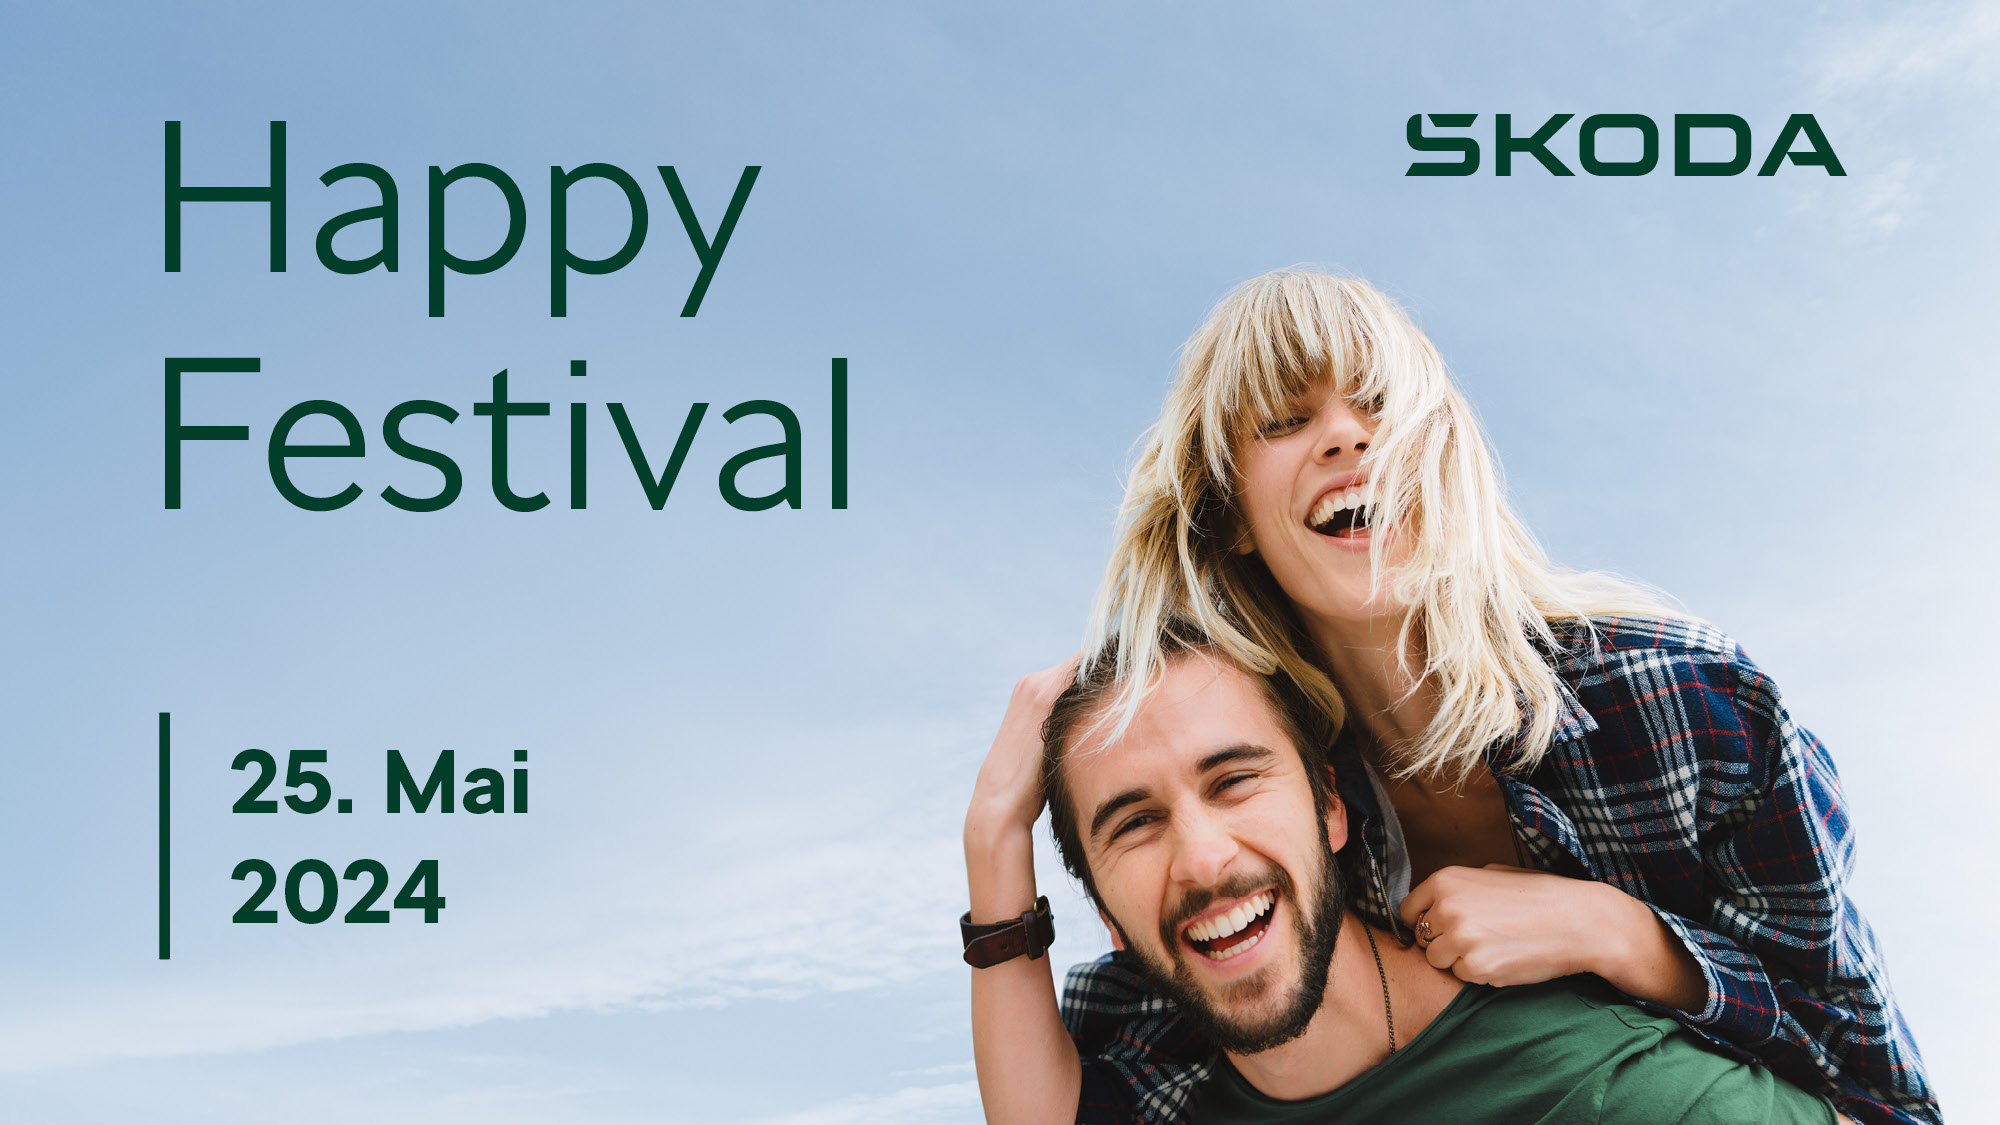 Skoda Happy Festival 25. Mai 2024